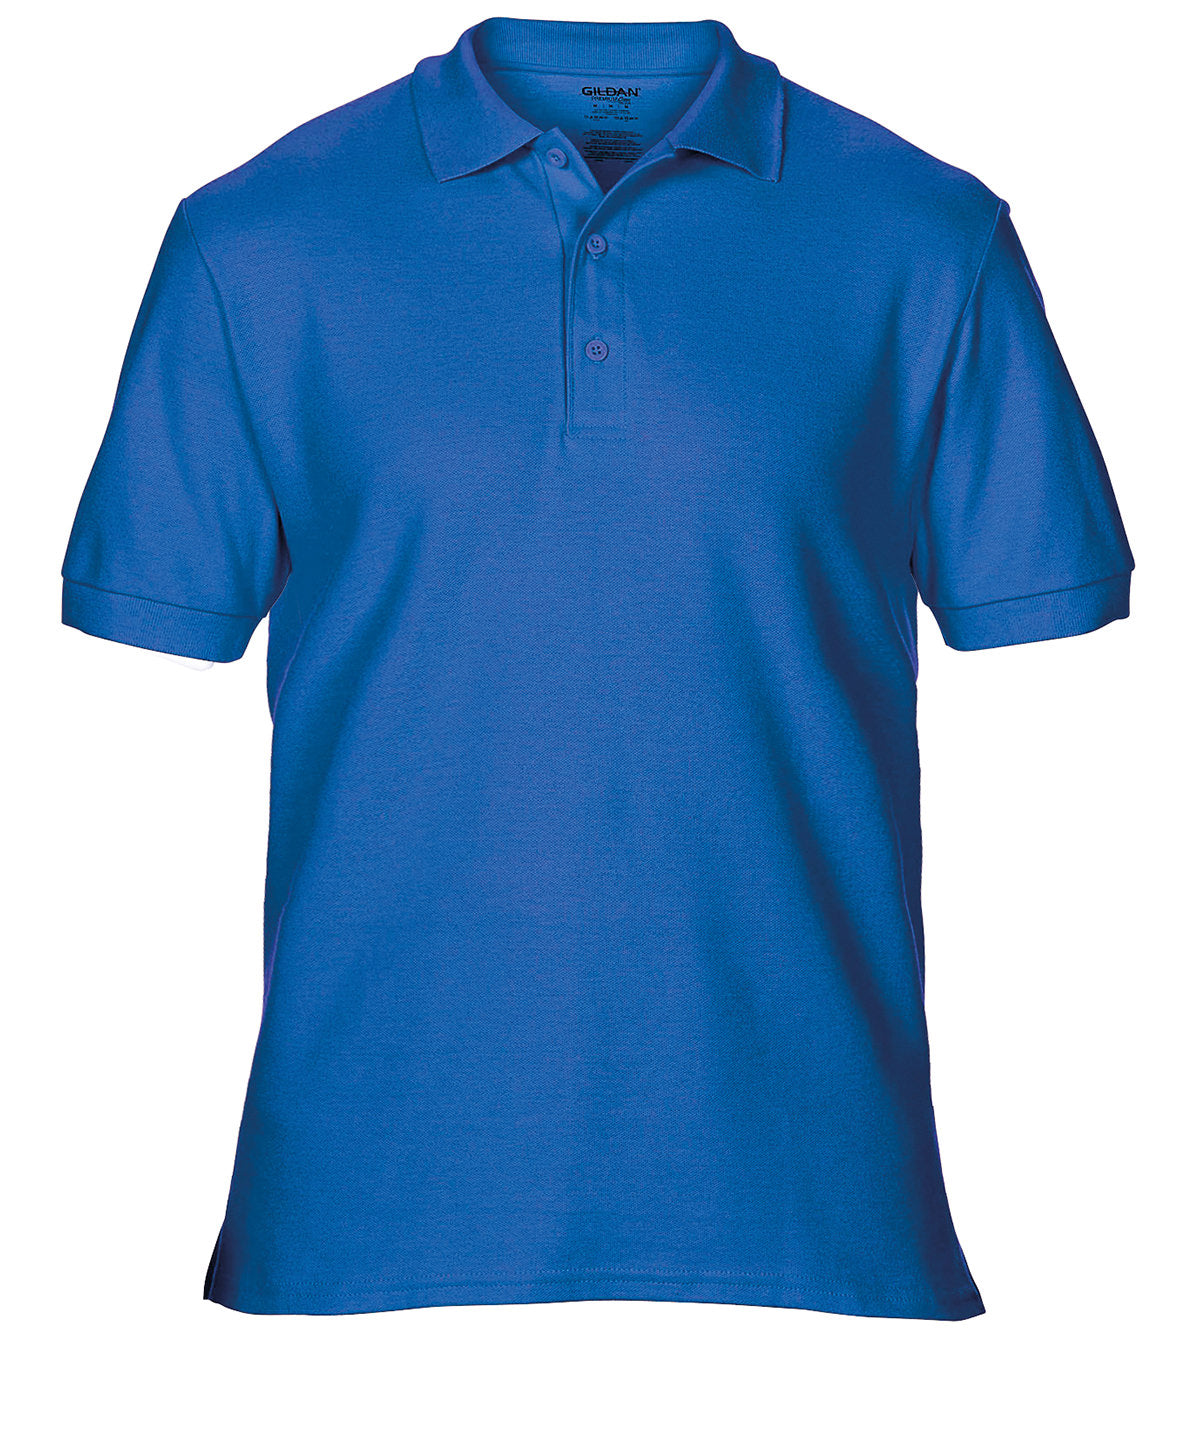 Personalised Polo Shirts - Black Gildan Hammer® piqué sport shirt